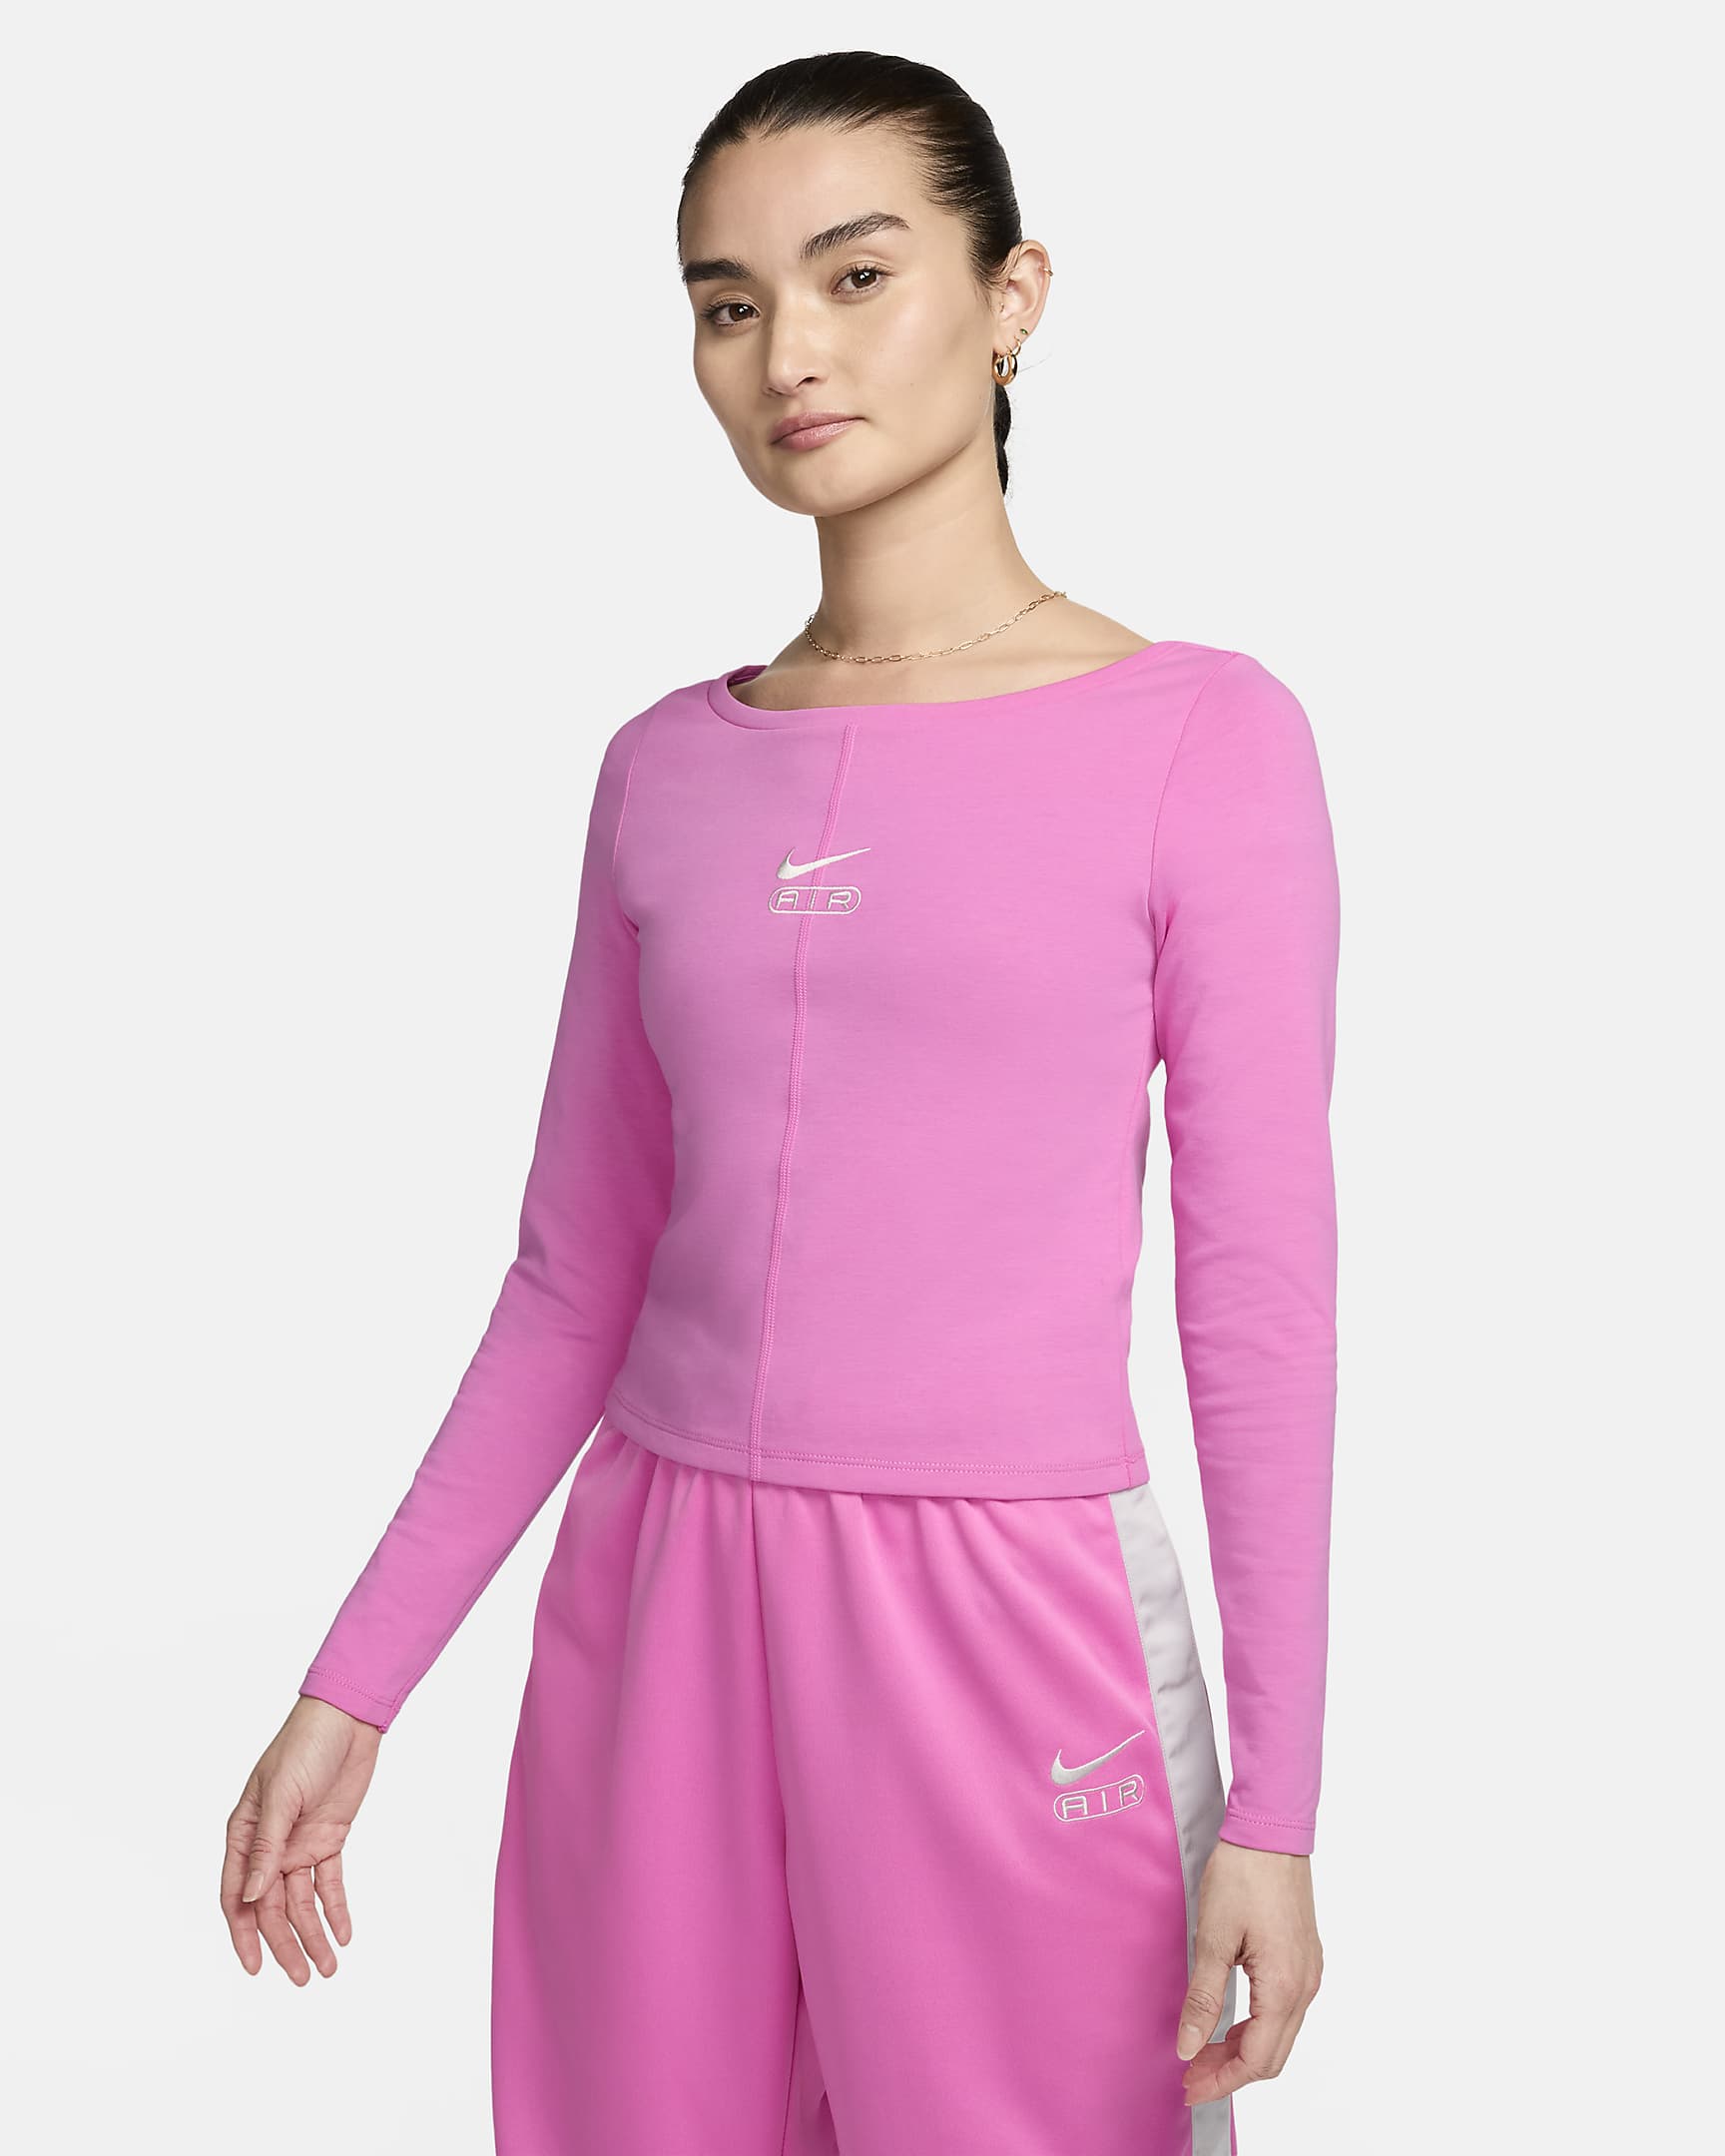 Nike Air Women's Long-Sleeve Top. Nike SG